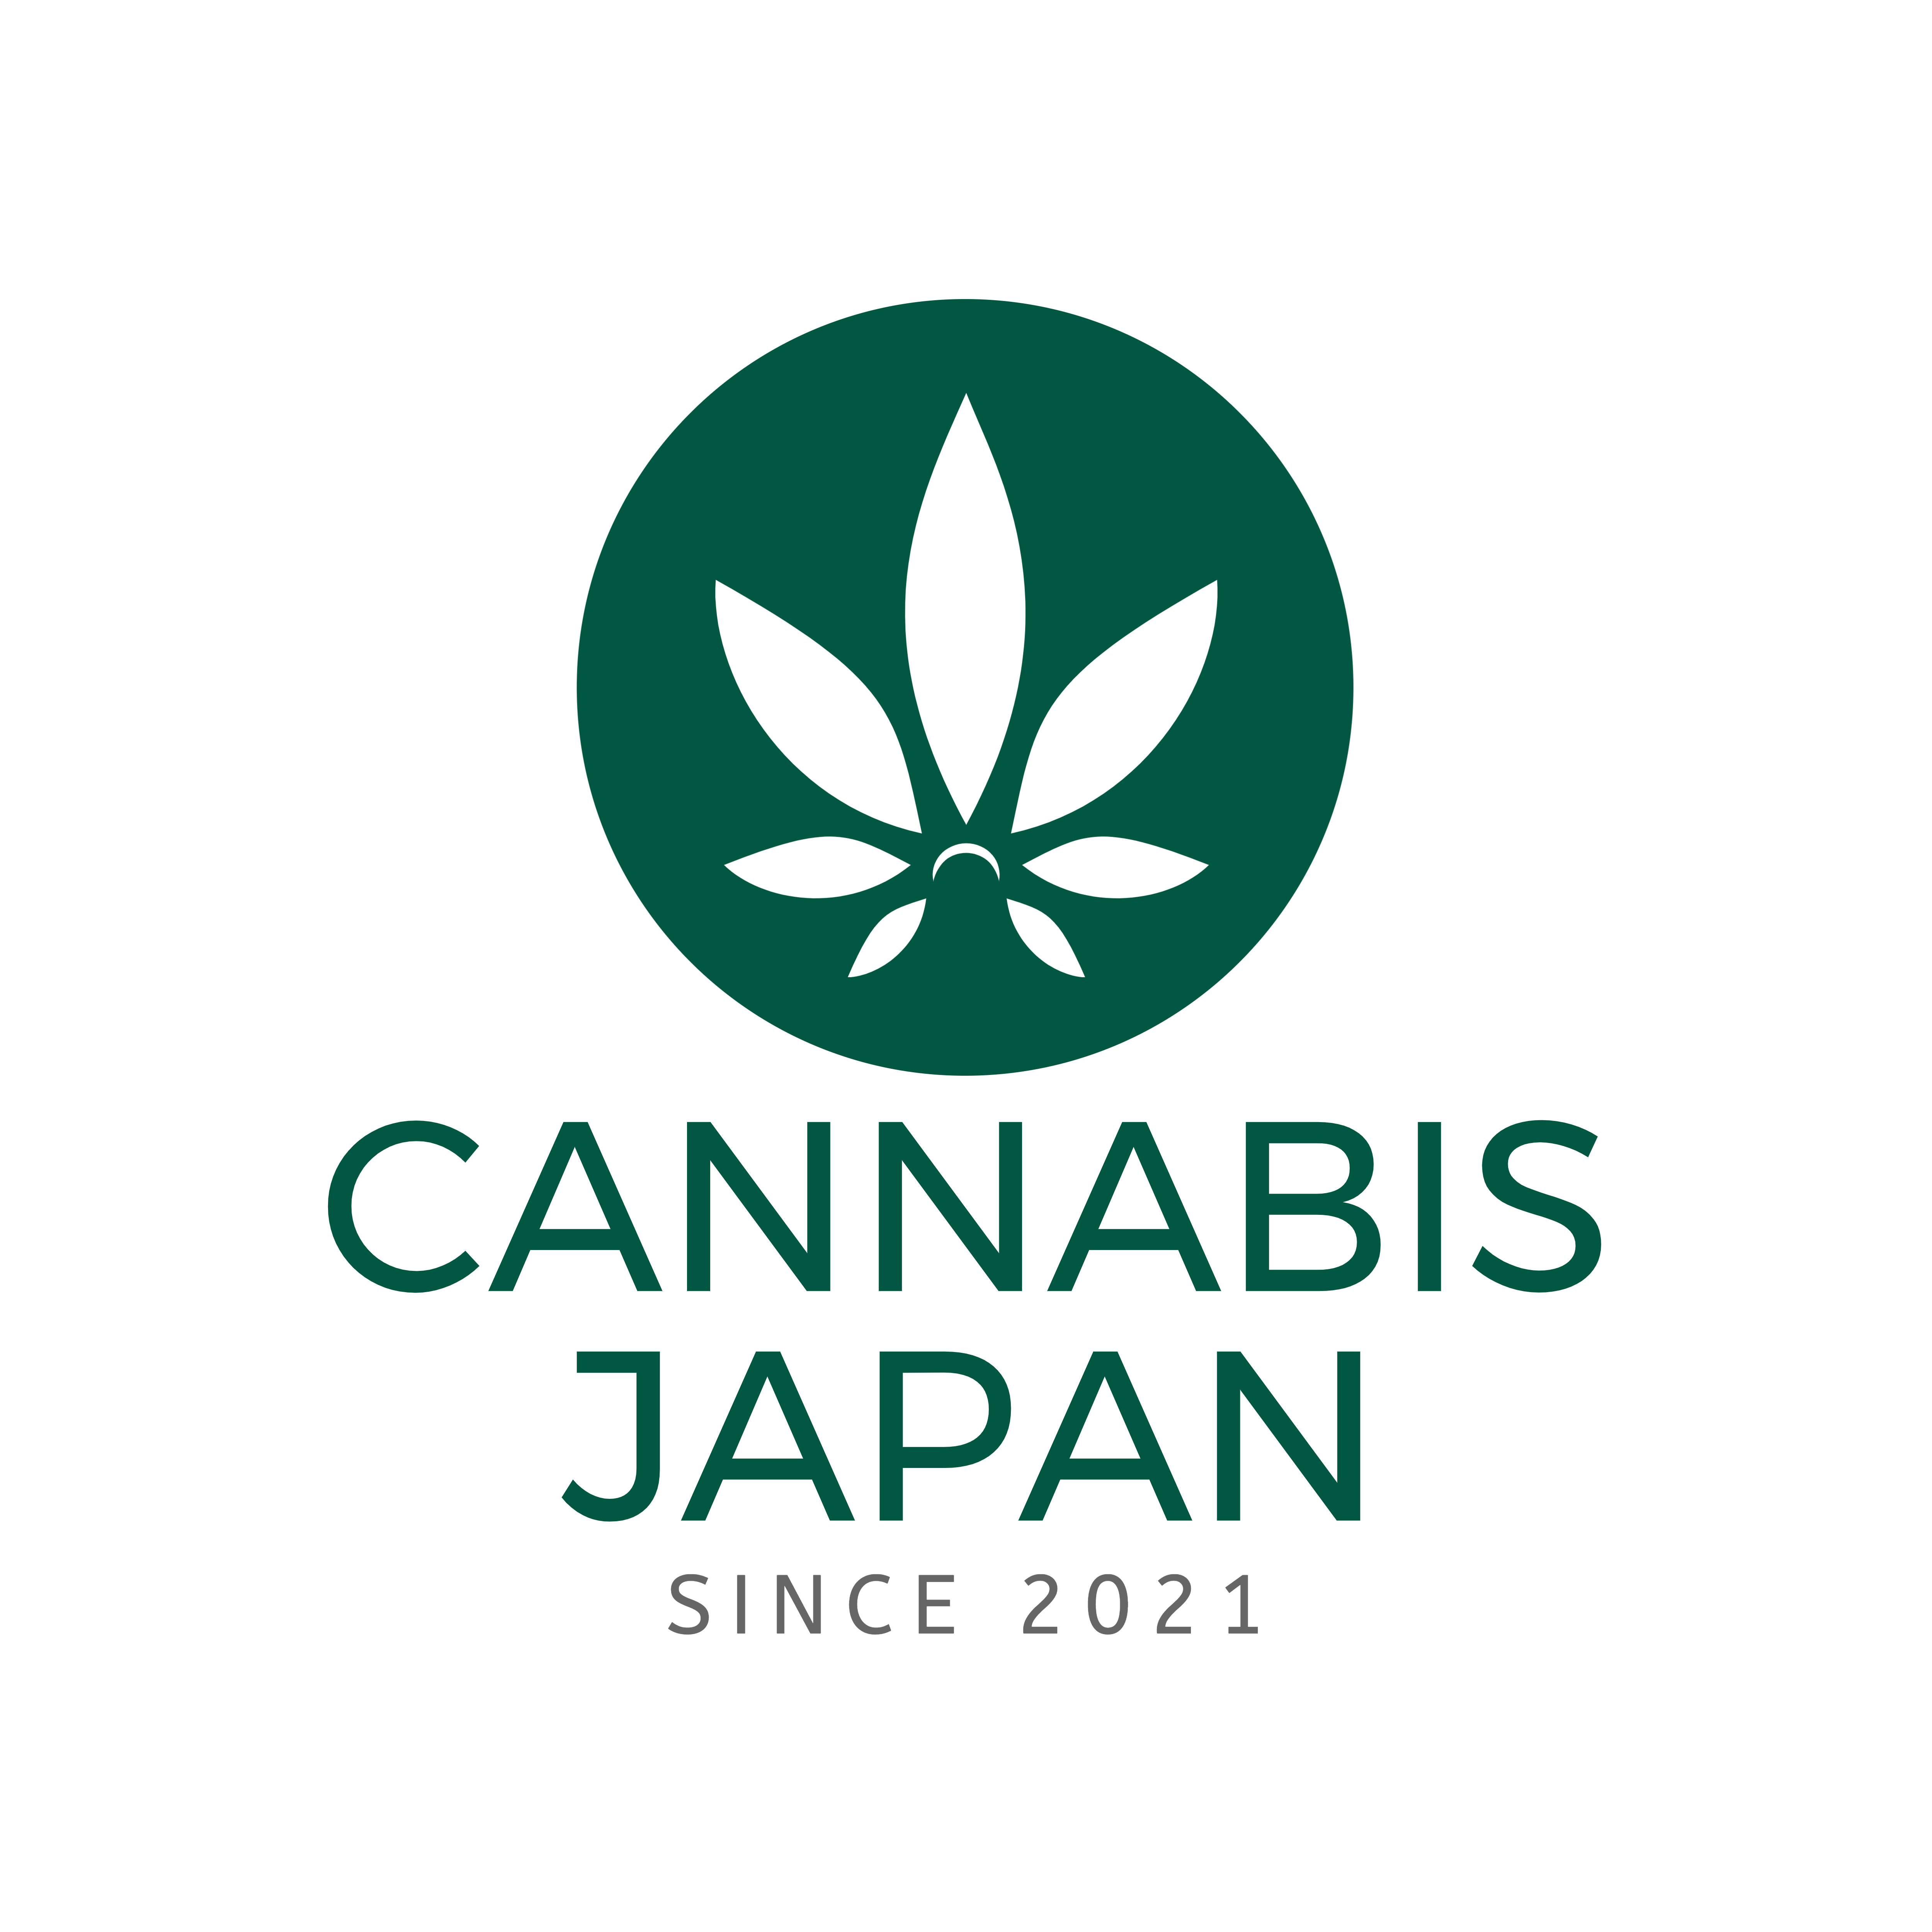 Contact Cannabis Japan